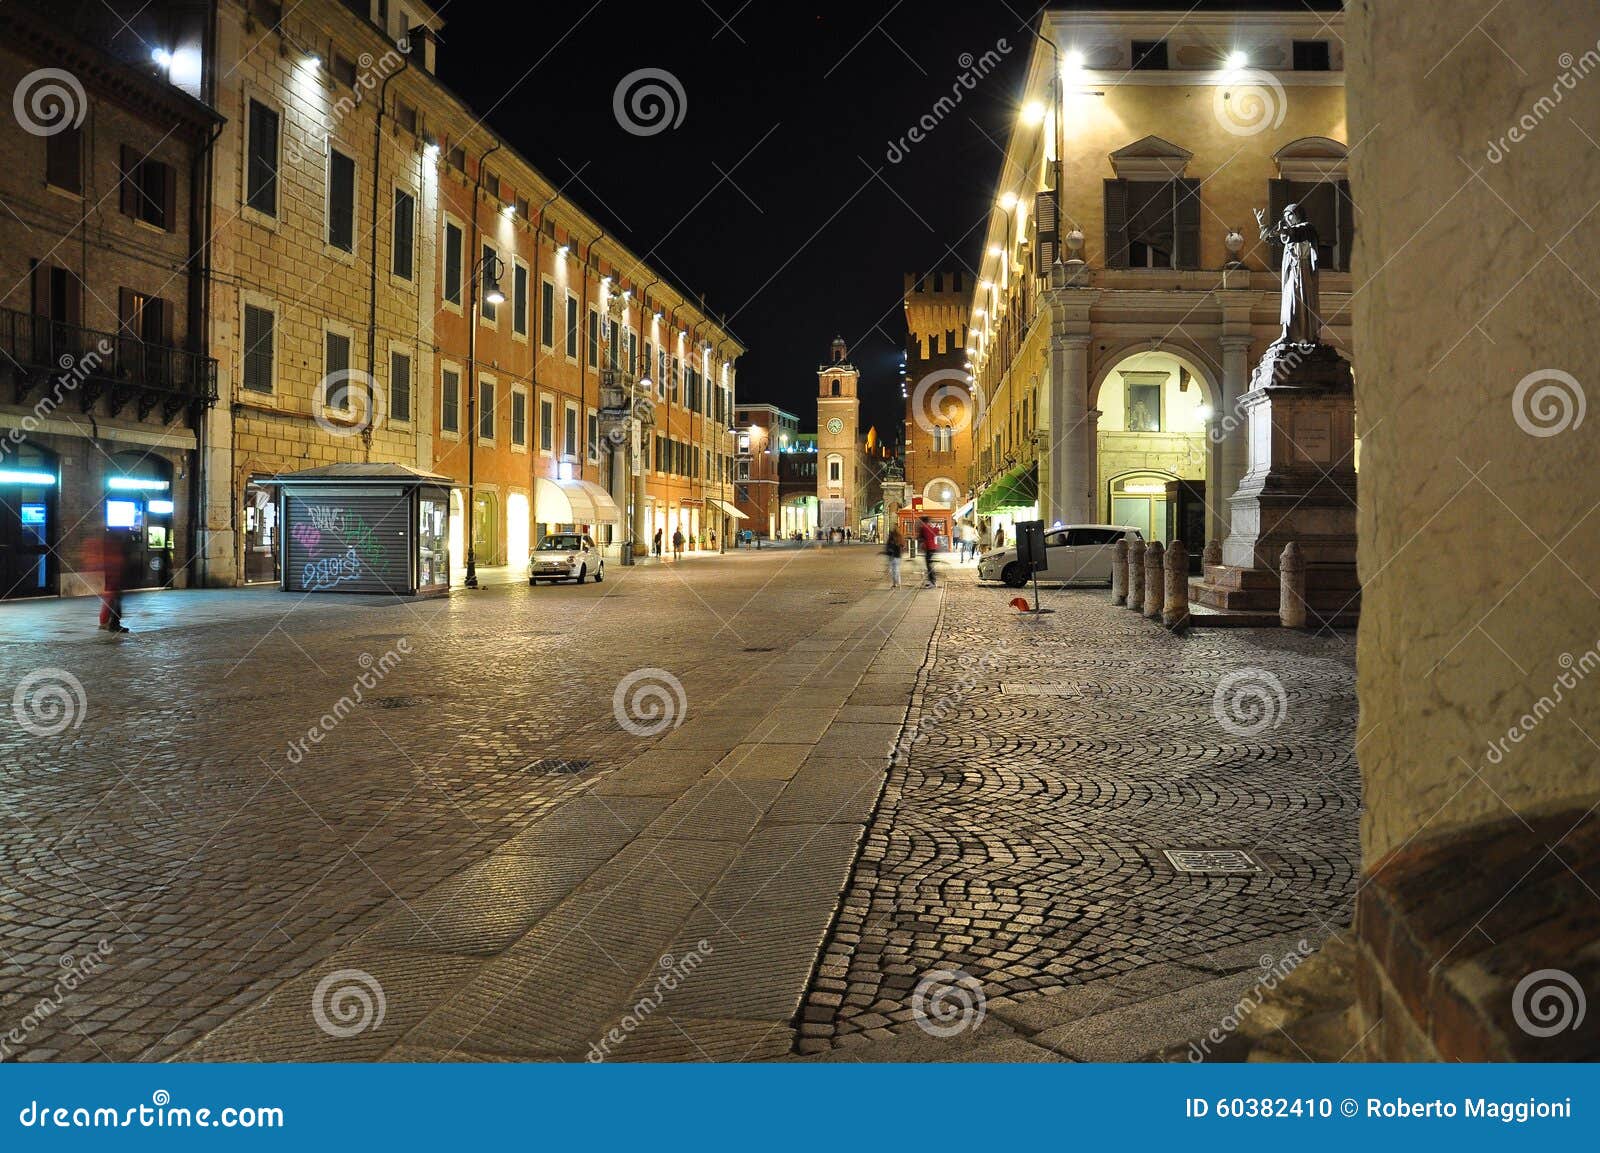 ferrara, emilia romagna, italy. pedestrian street by night